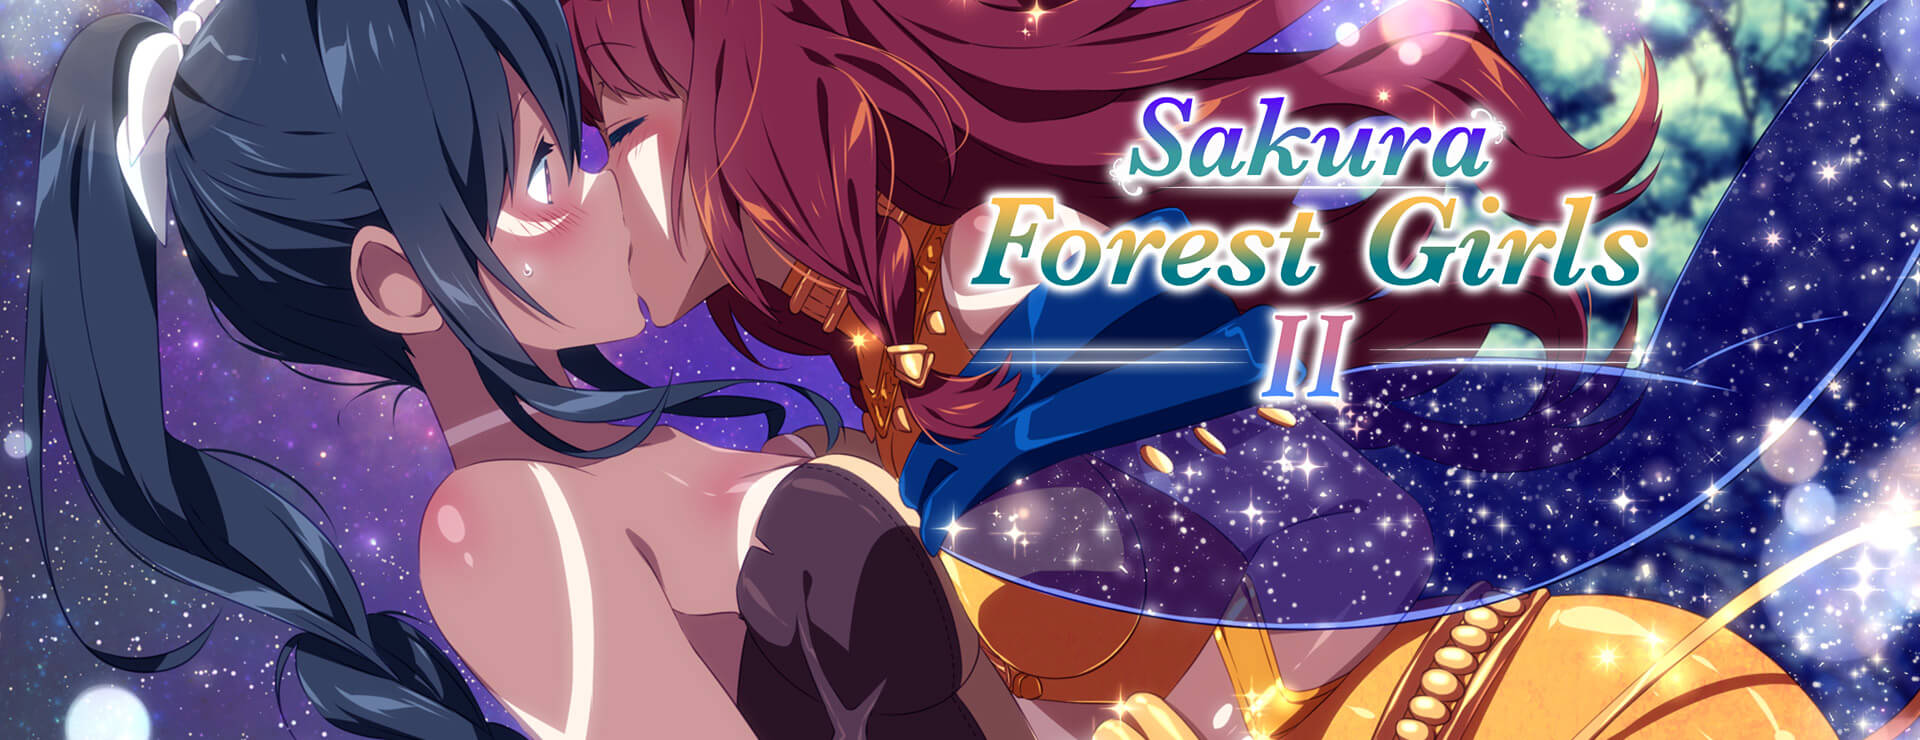 Sakura Forest Girls 2 - Roman Visuel Jeu